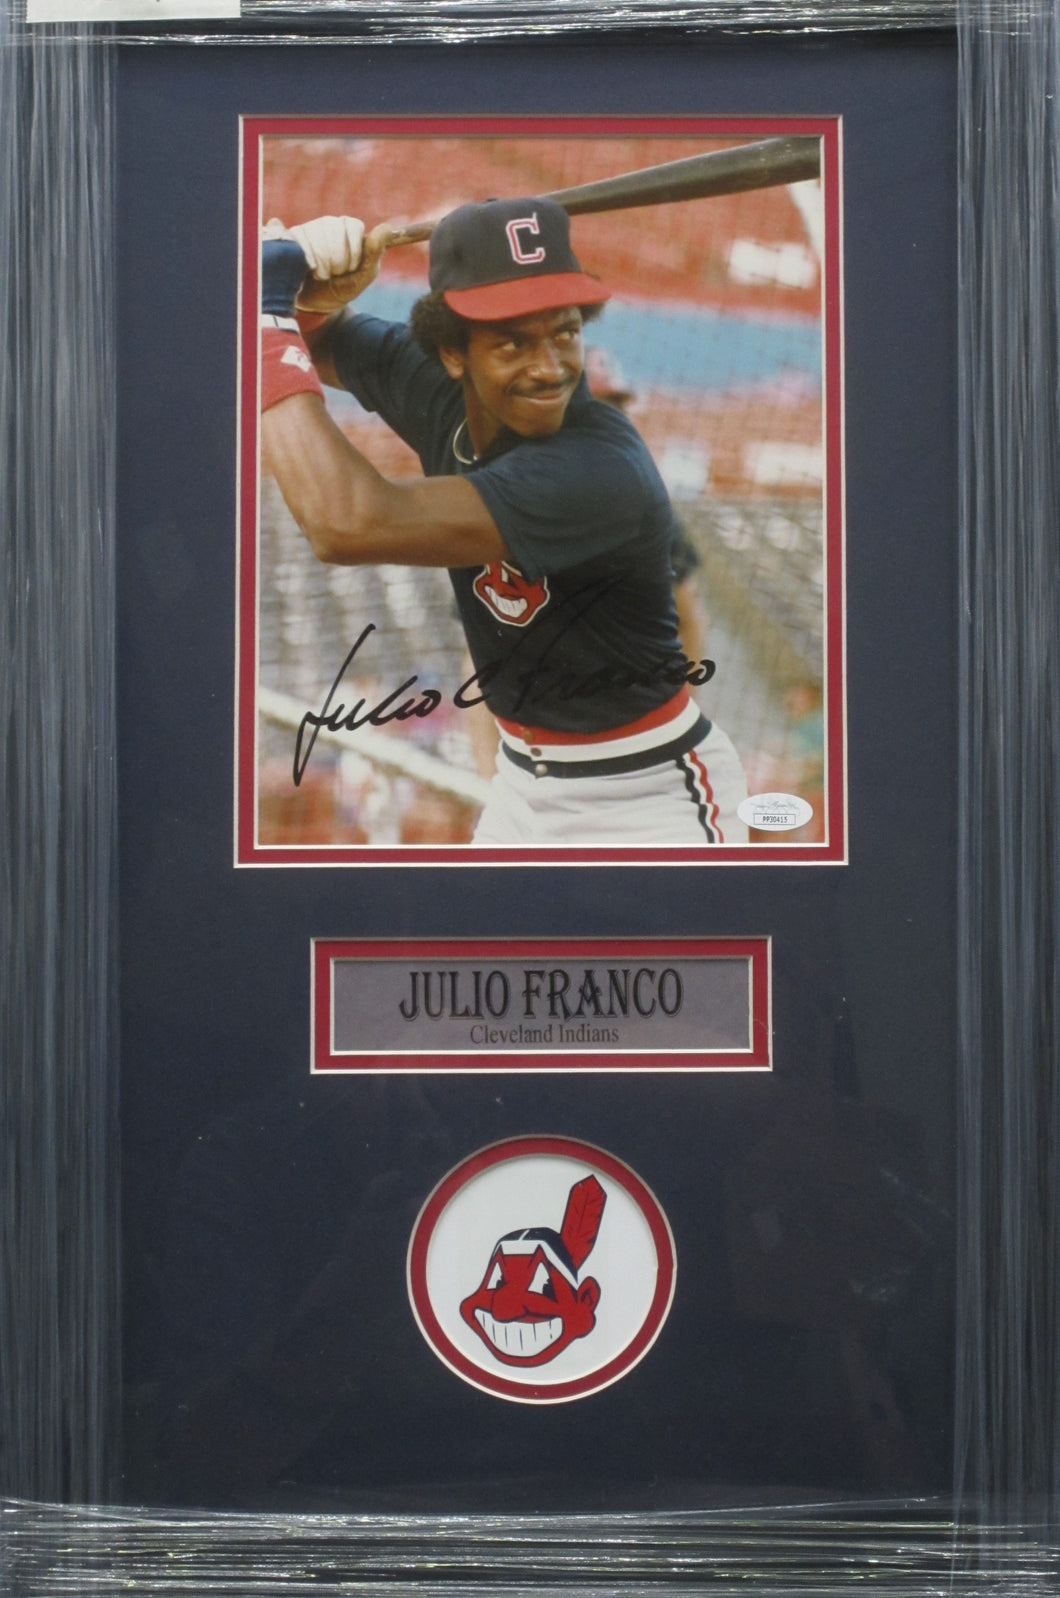 Cleveland Indians Julio Franco Signed 8x10 Photo Framed & Matted with JSA COA